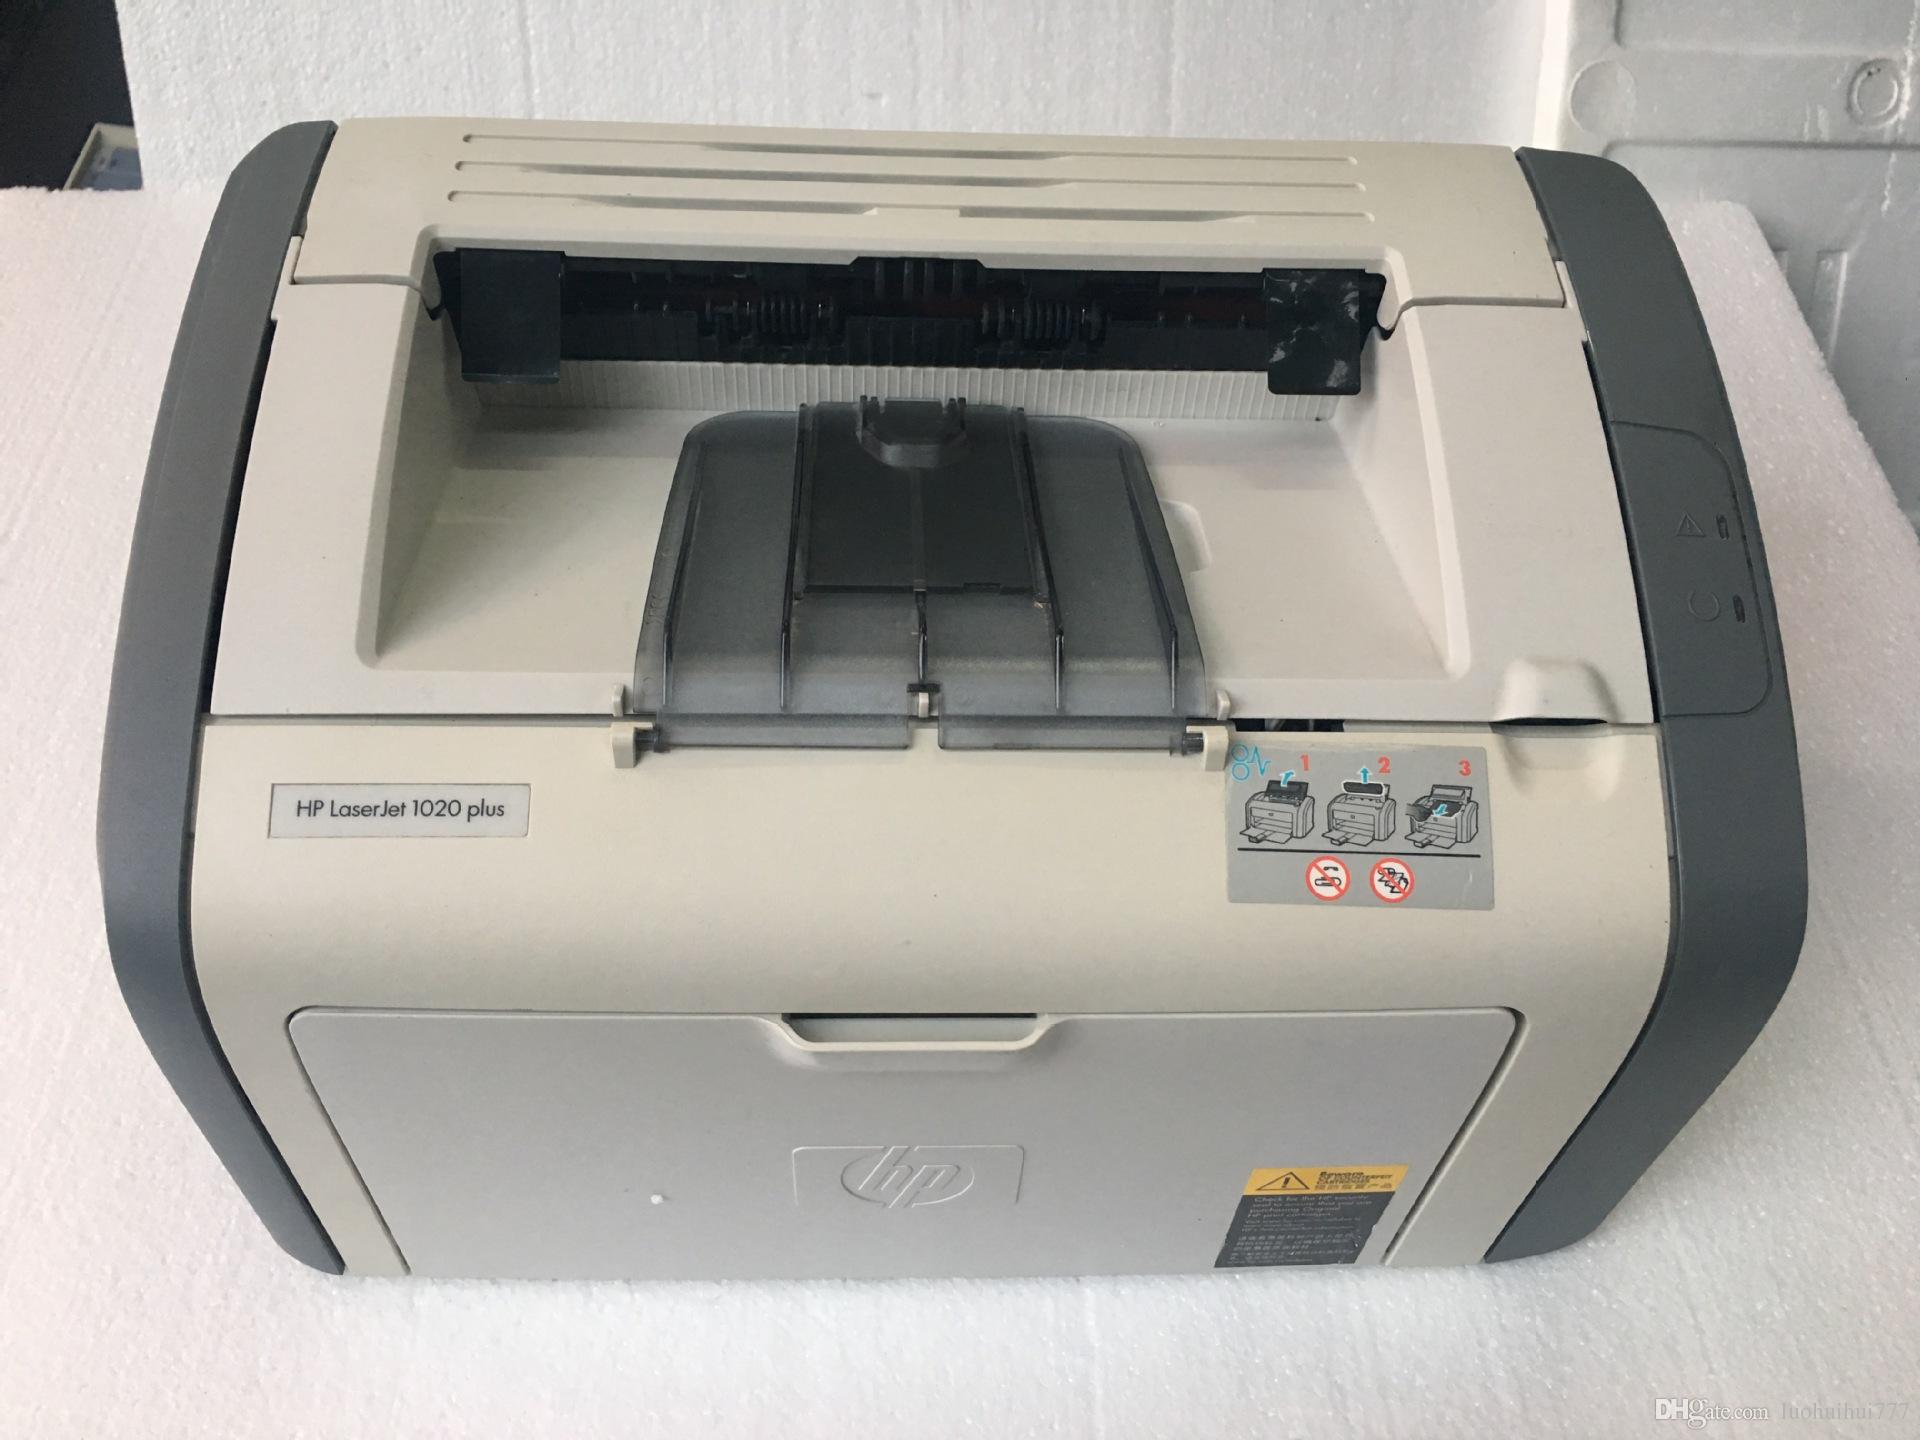 Une imprimante laser de bureau